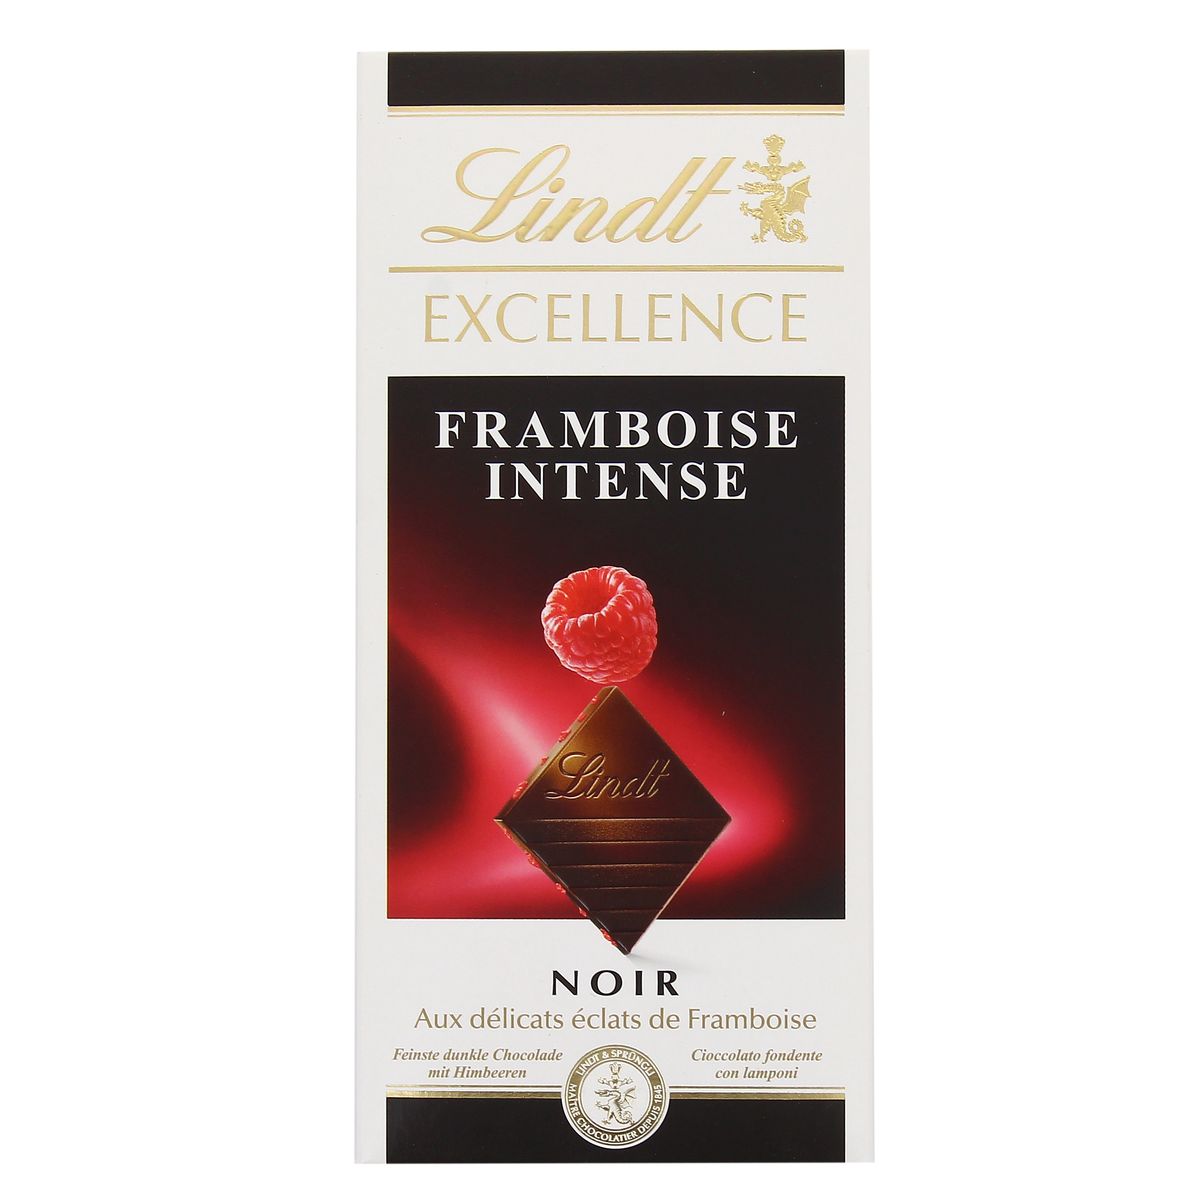 Achat Promotion Lindt Chocolat noir Excellence Framboise intense, 100g